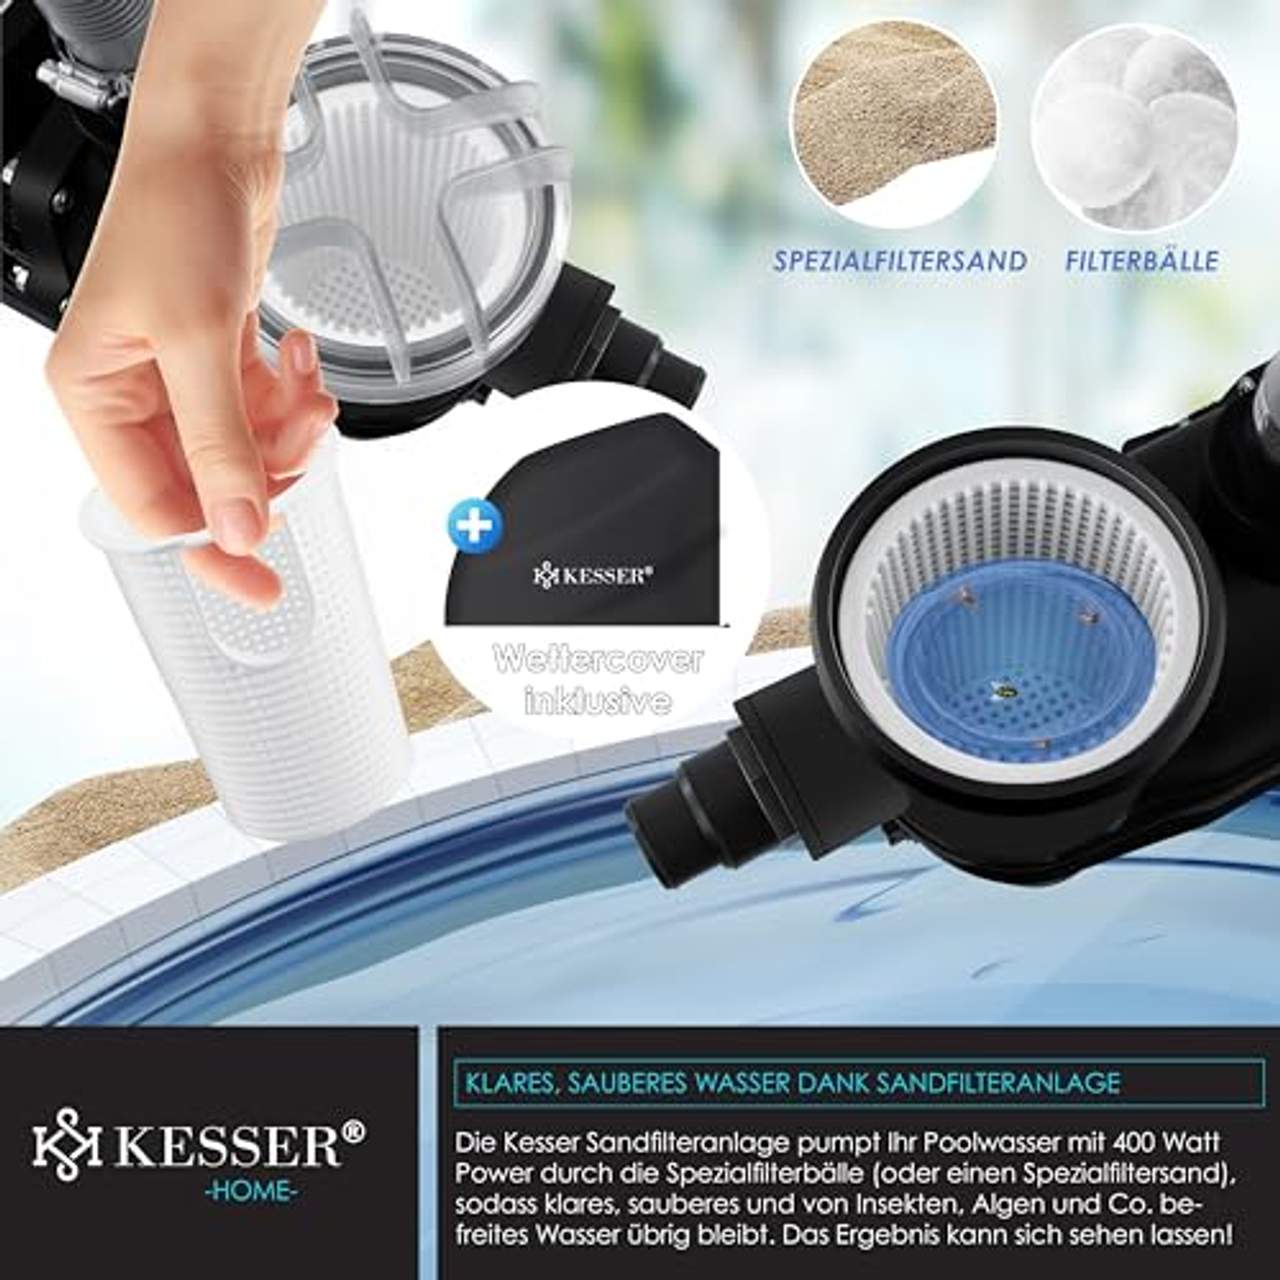 KESSER Sandfilter Sandfilteranlage 700g Filterbälle ersetzen 25kg Filtersand- Poolfilter 10